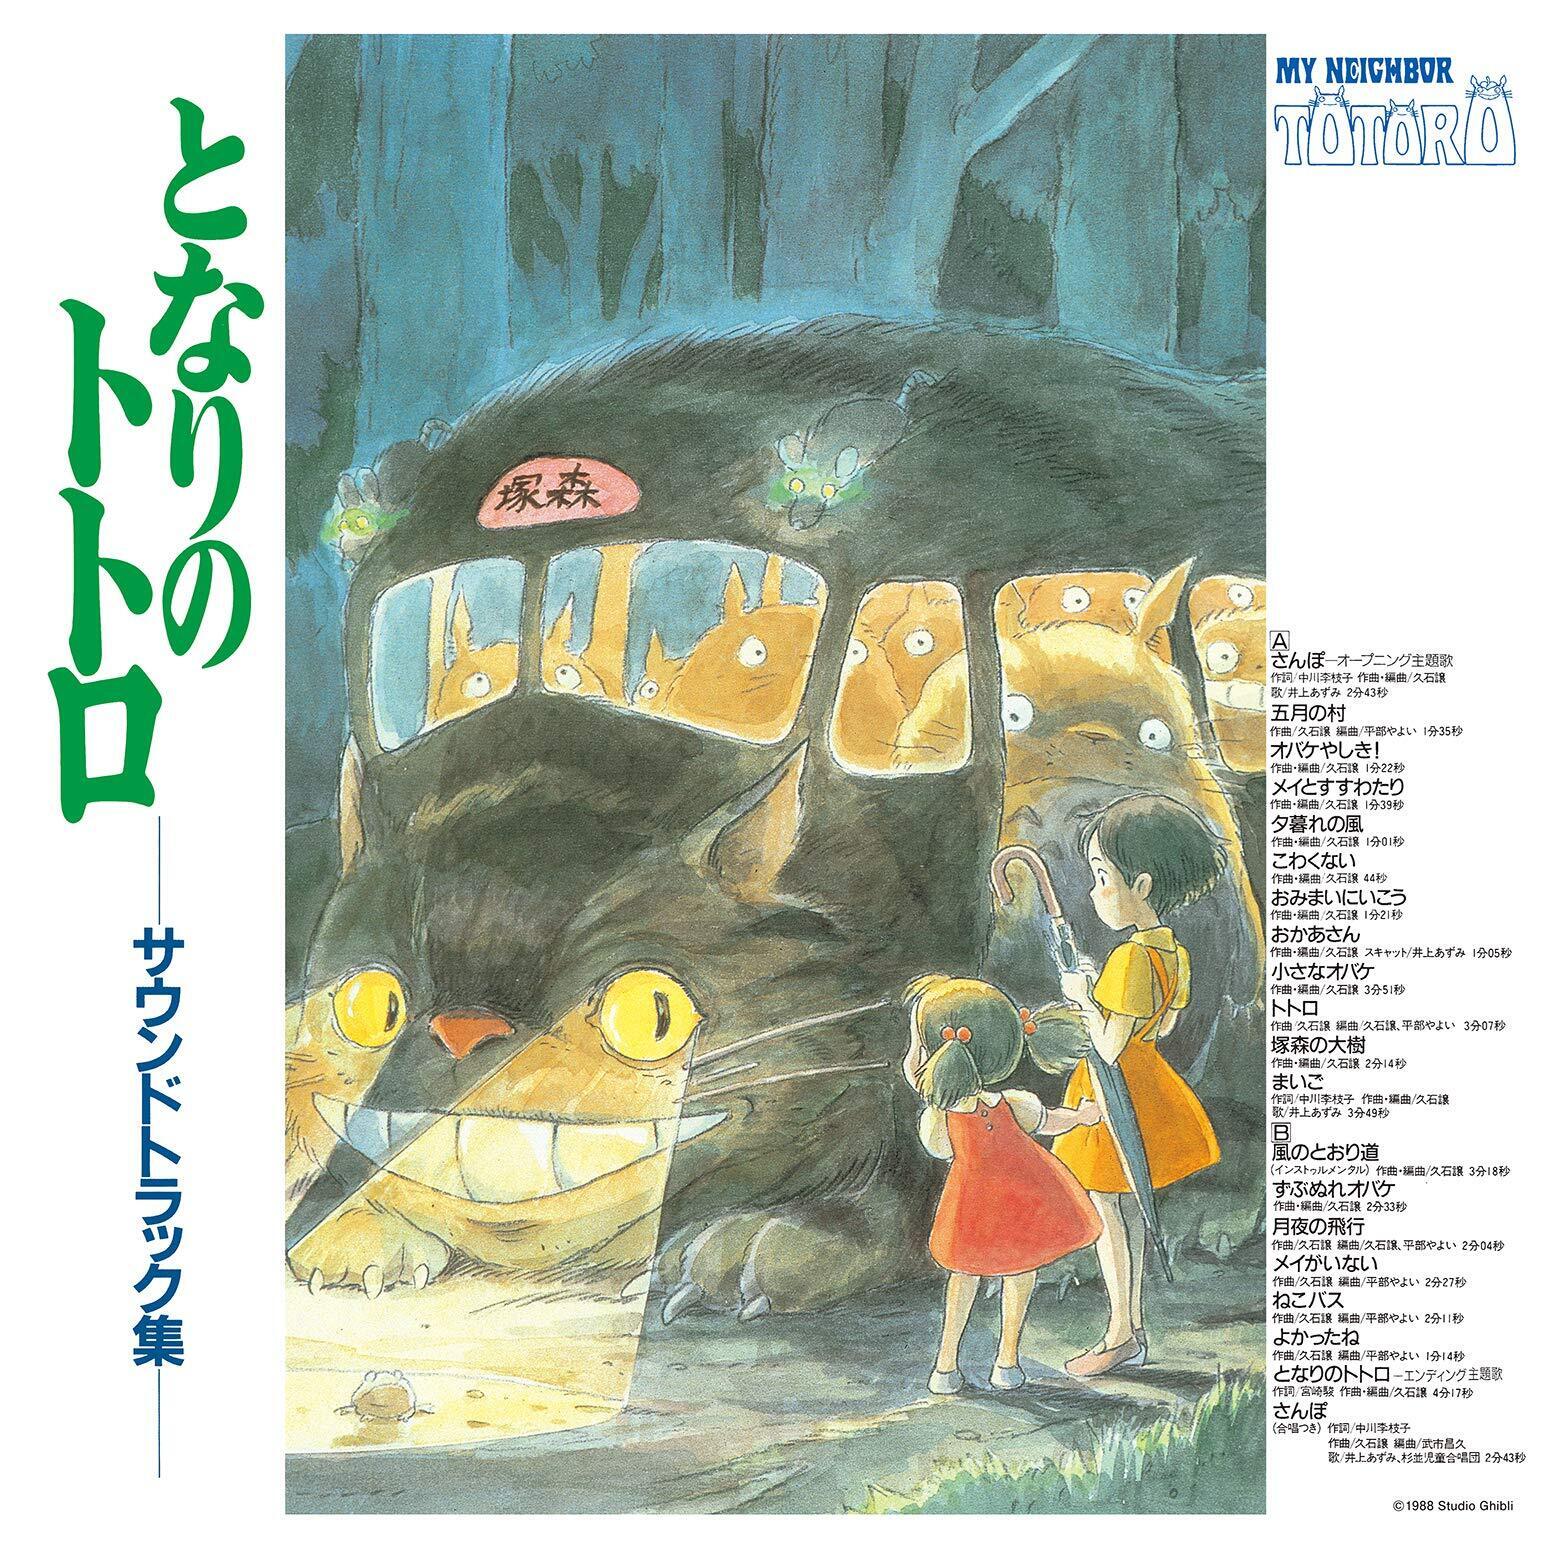 Поп Studio Ghibli Records OST - My Neighbor Totoro (Joe Hisaishi) (Black Vinyl LP) саундтрек shining sioux records эдуард артемьев – инспектор гулл девочка и дельфин white vinyl